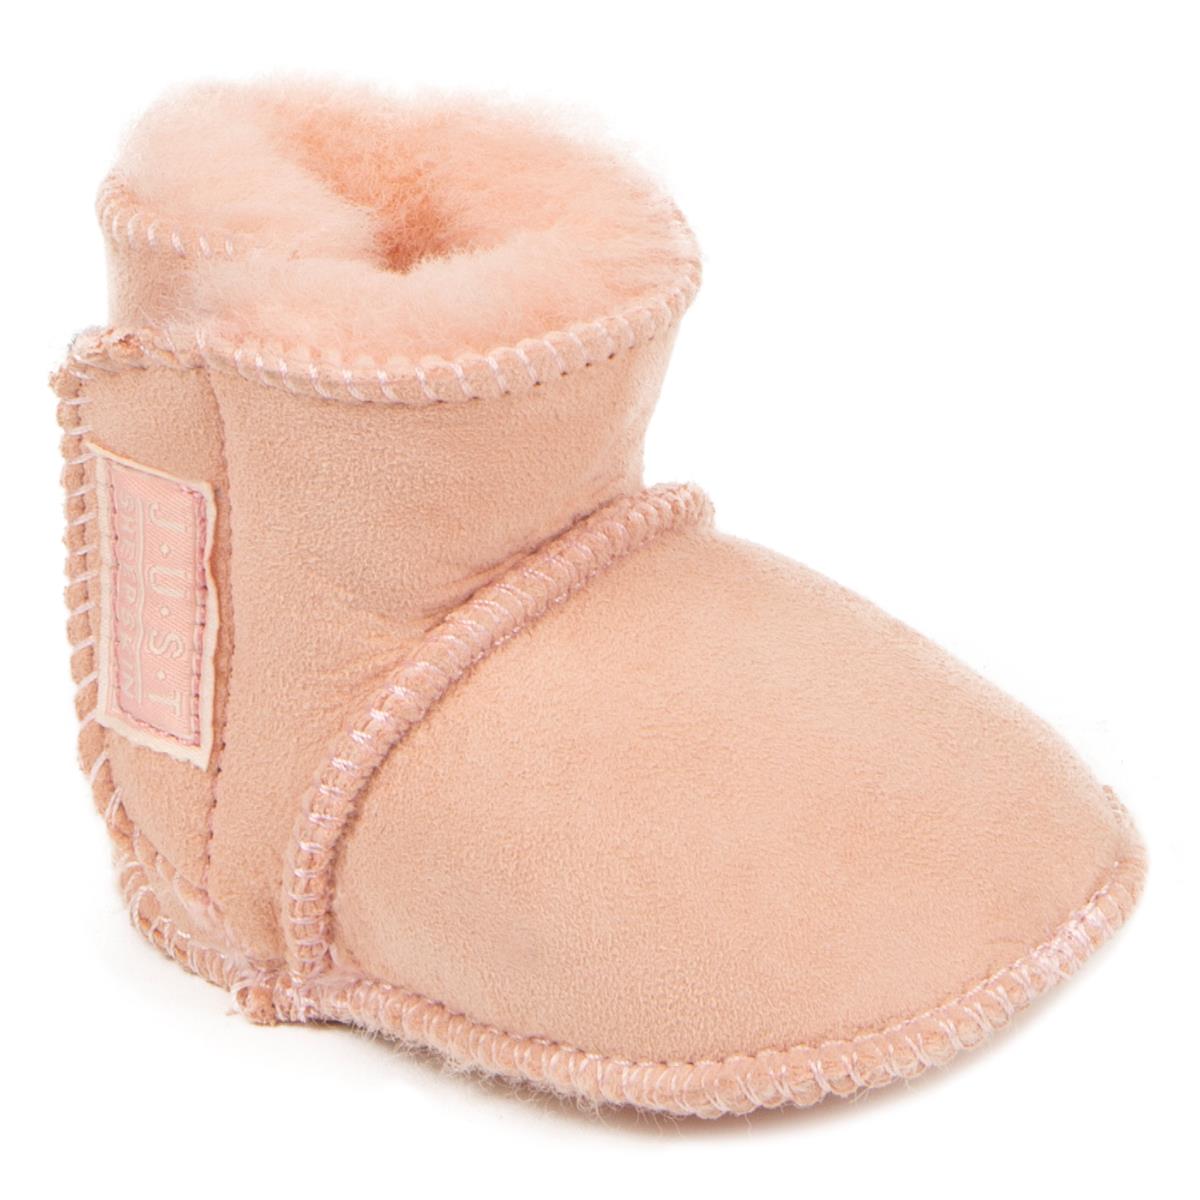 Babies Adelphi Sheepskin Booties | Just Sheepskin Slippers and Boots